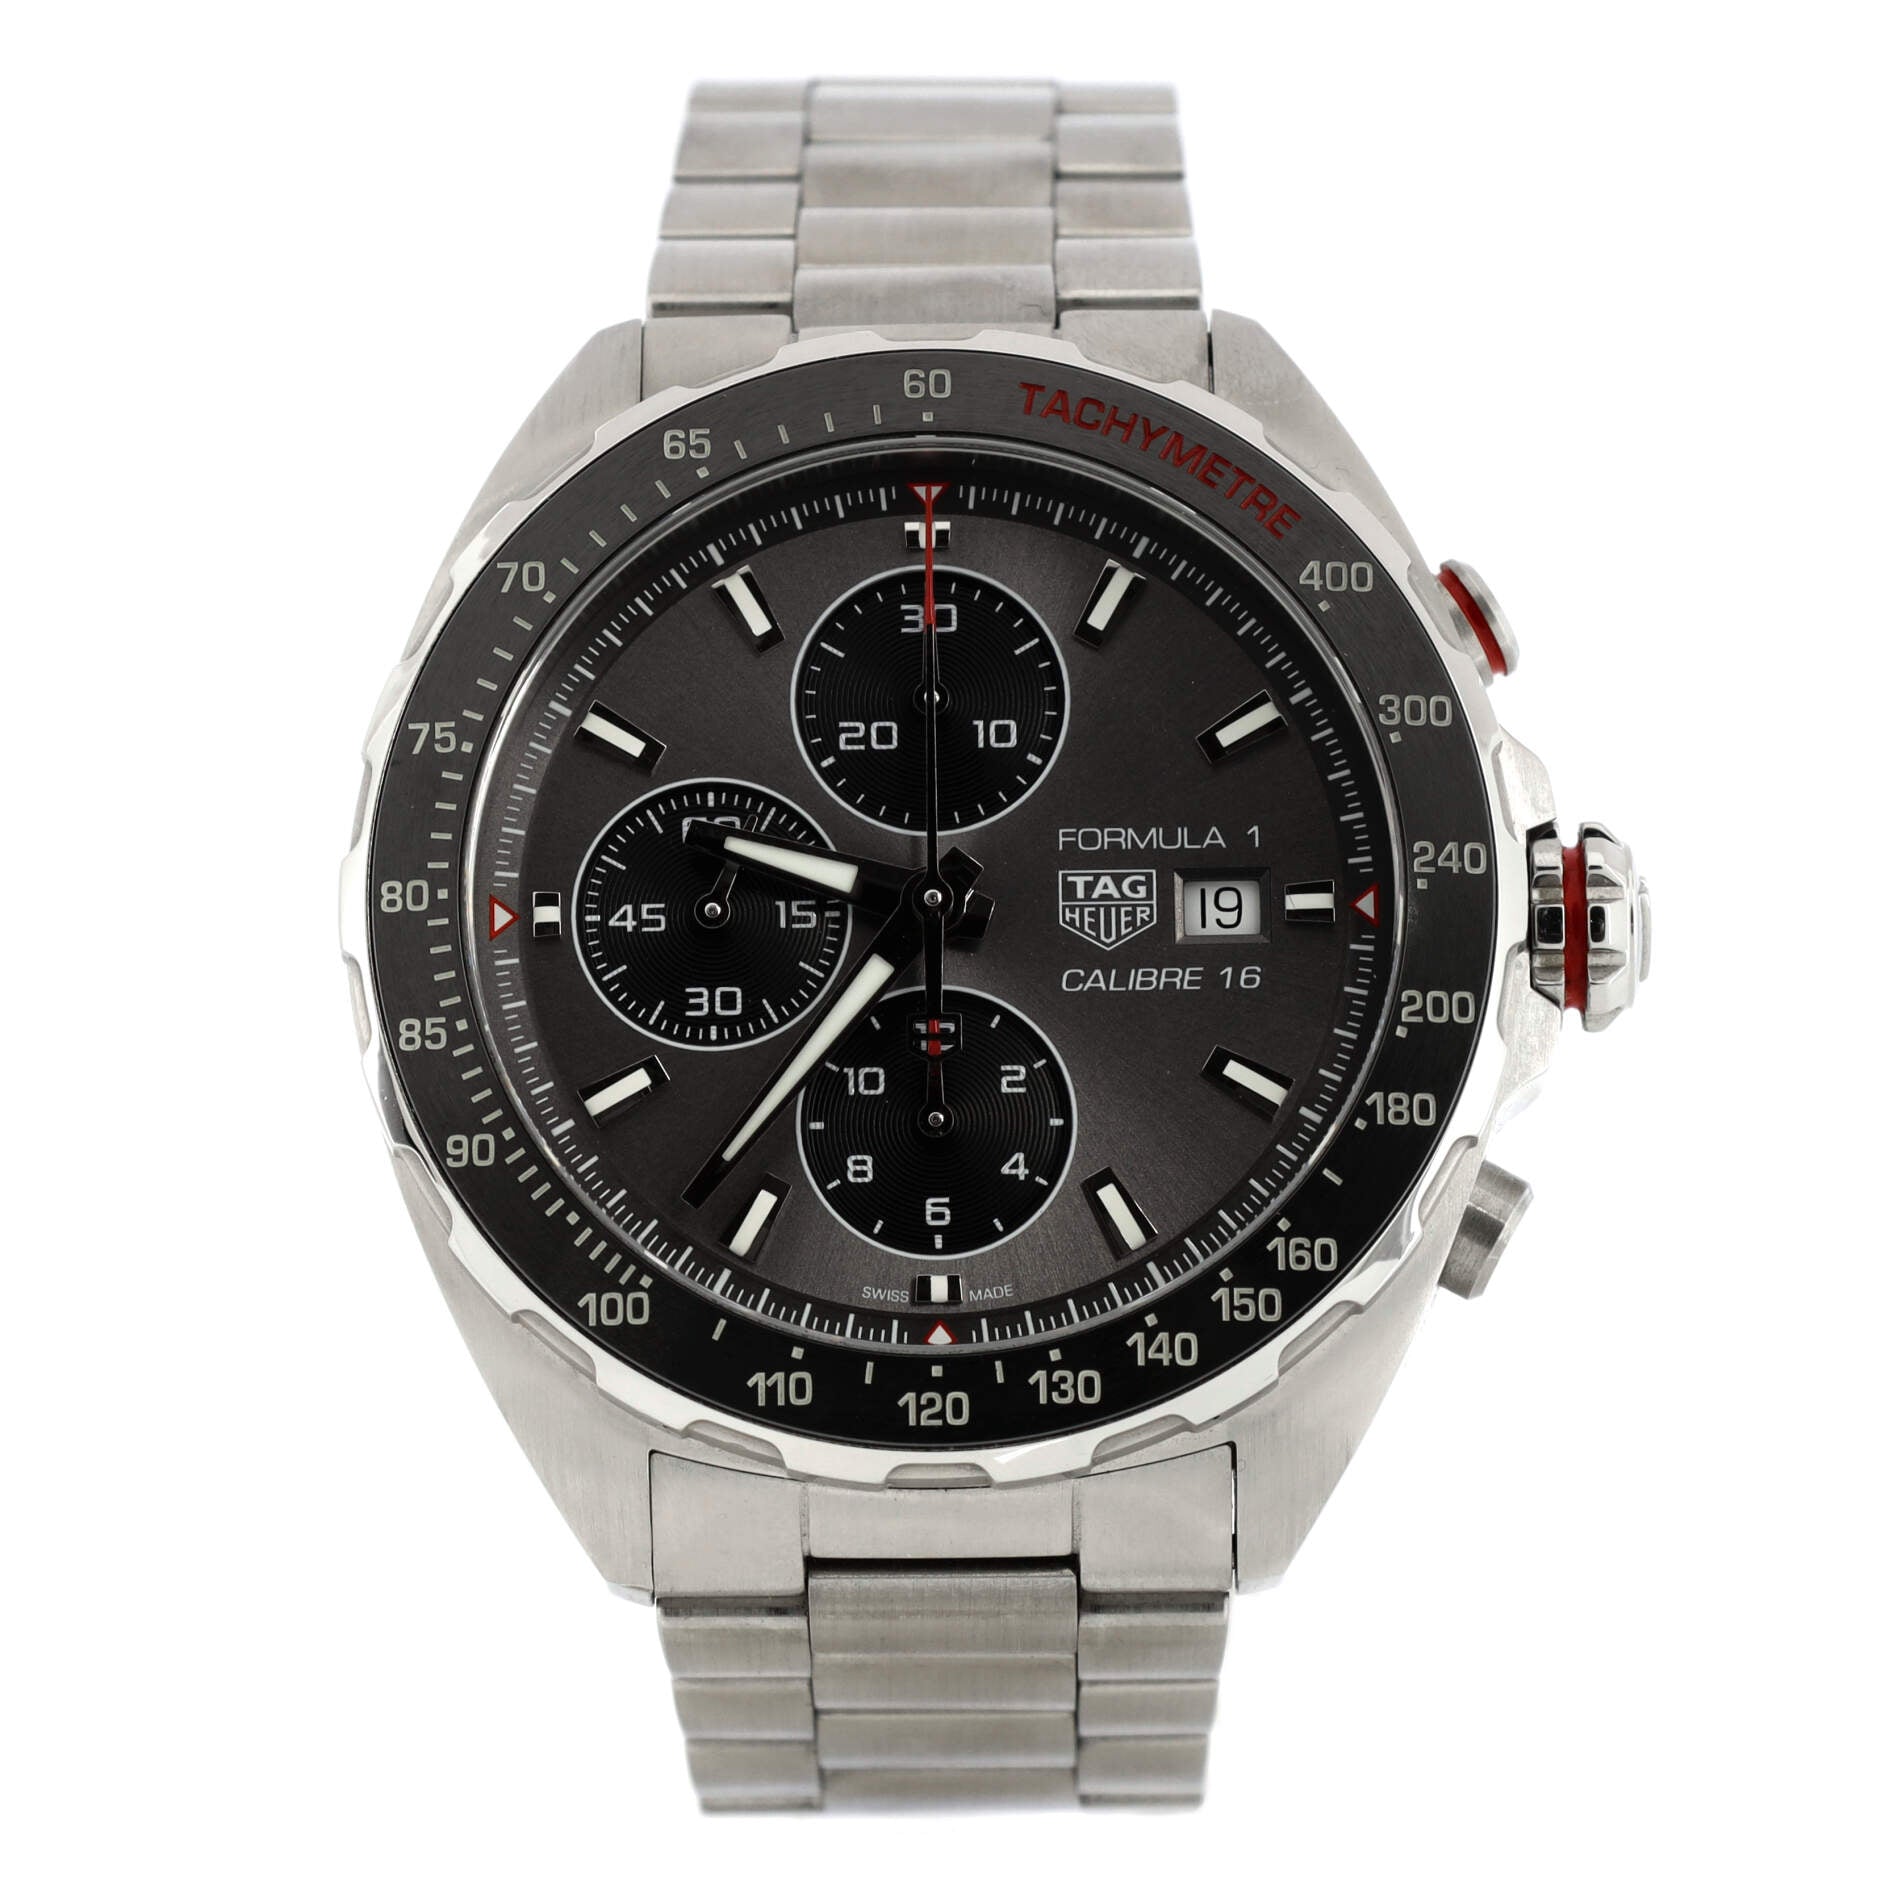 Formula 1 Calibre 16 Chronograph Automatic Watch (CAR2012.BA0876)